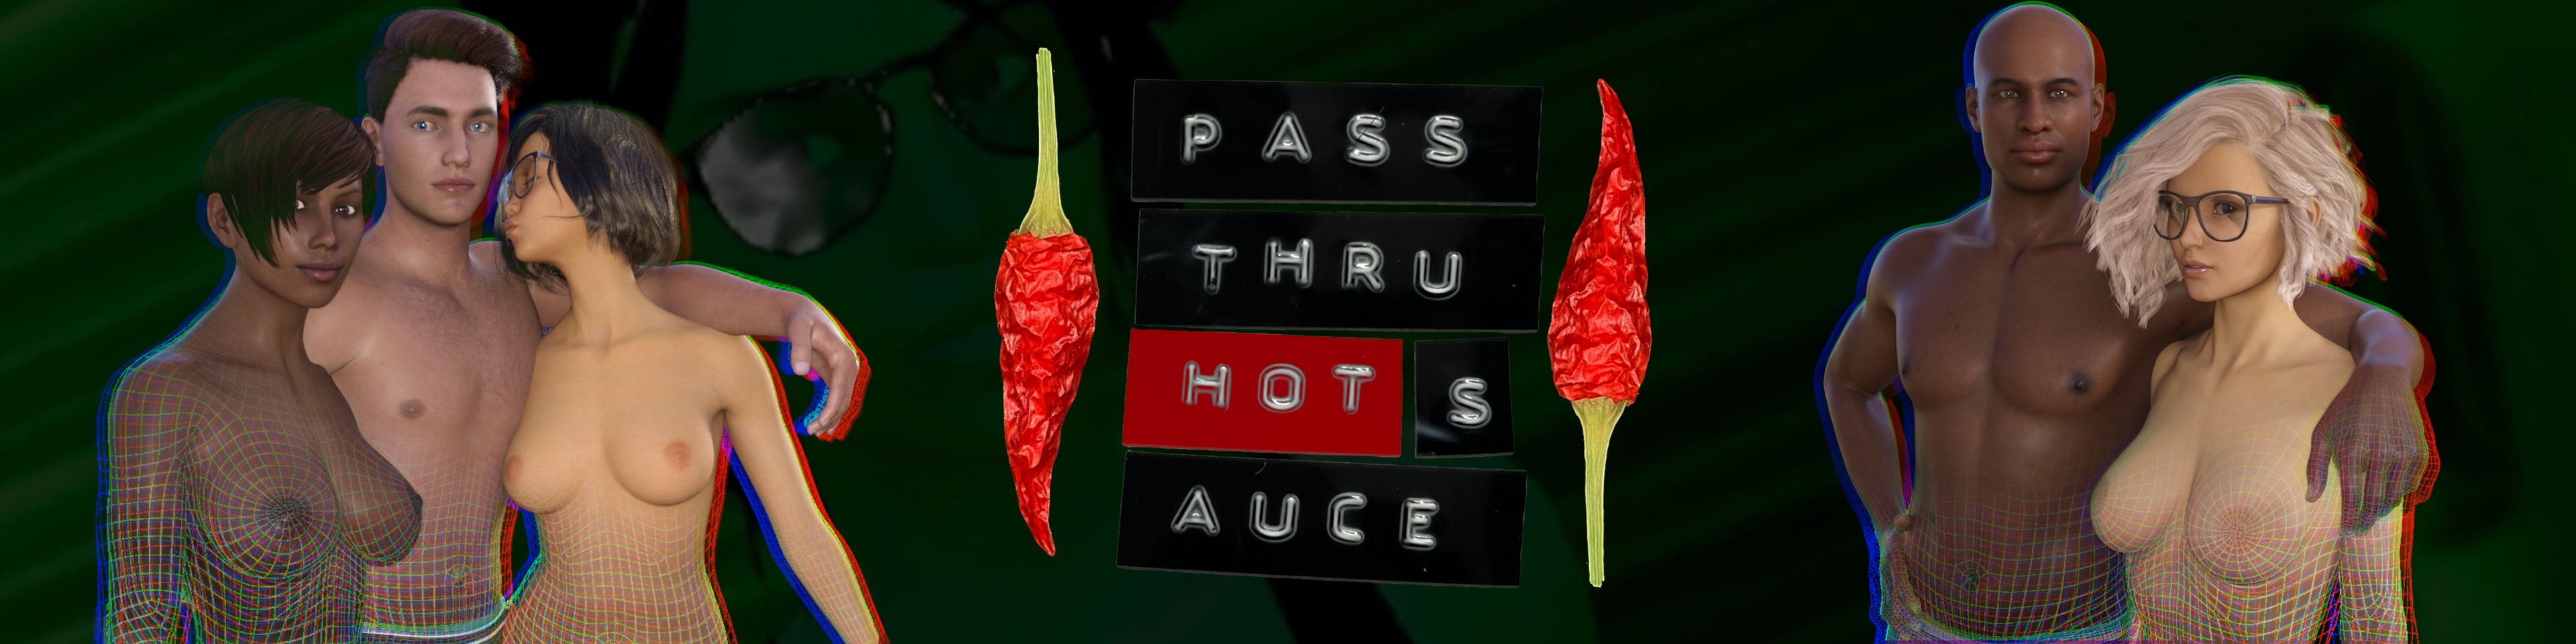 Pass Thru Hot Sauce - DEMO